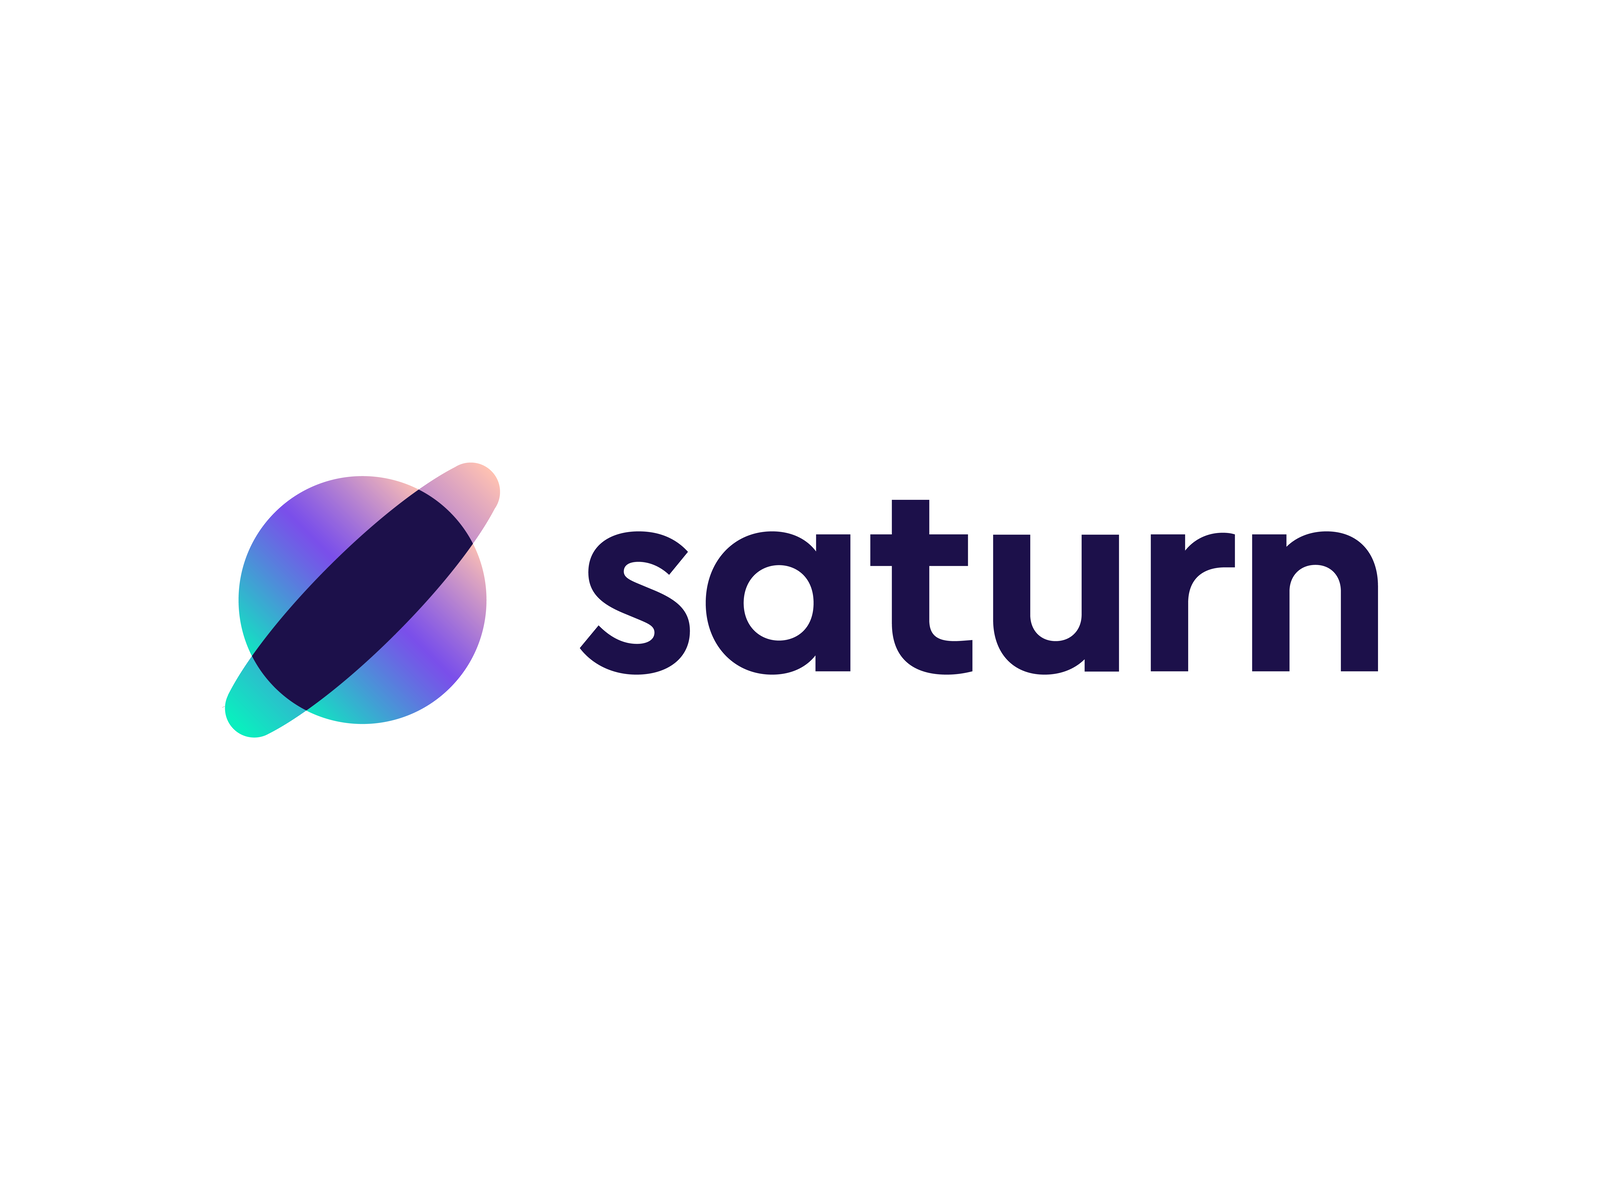 Saturn logo design planet cosmic Royalty Free Vector Image